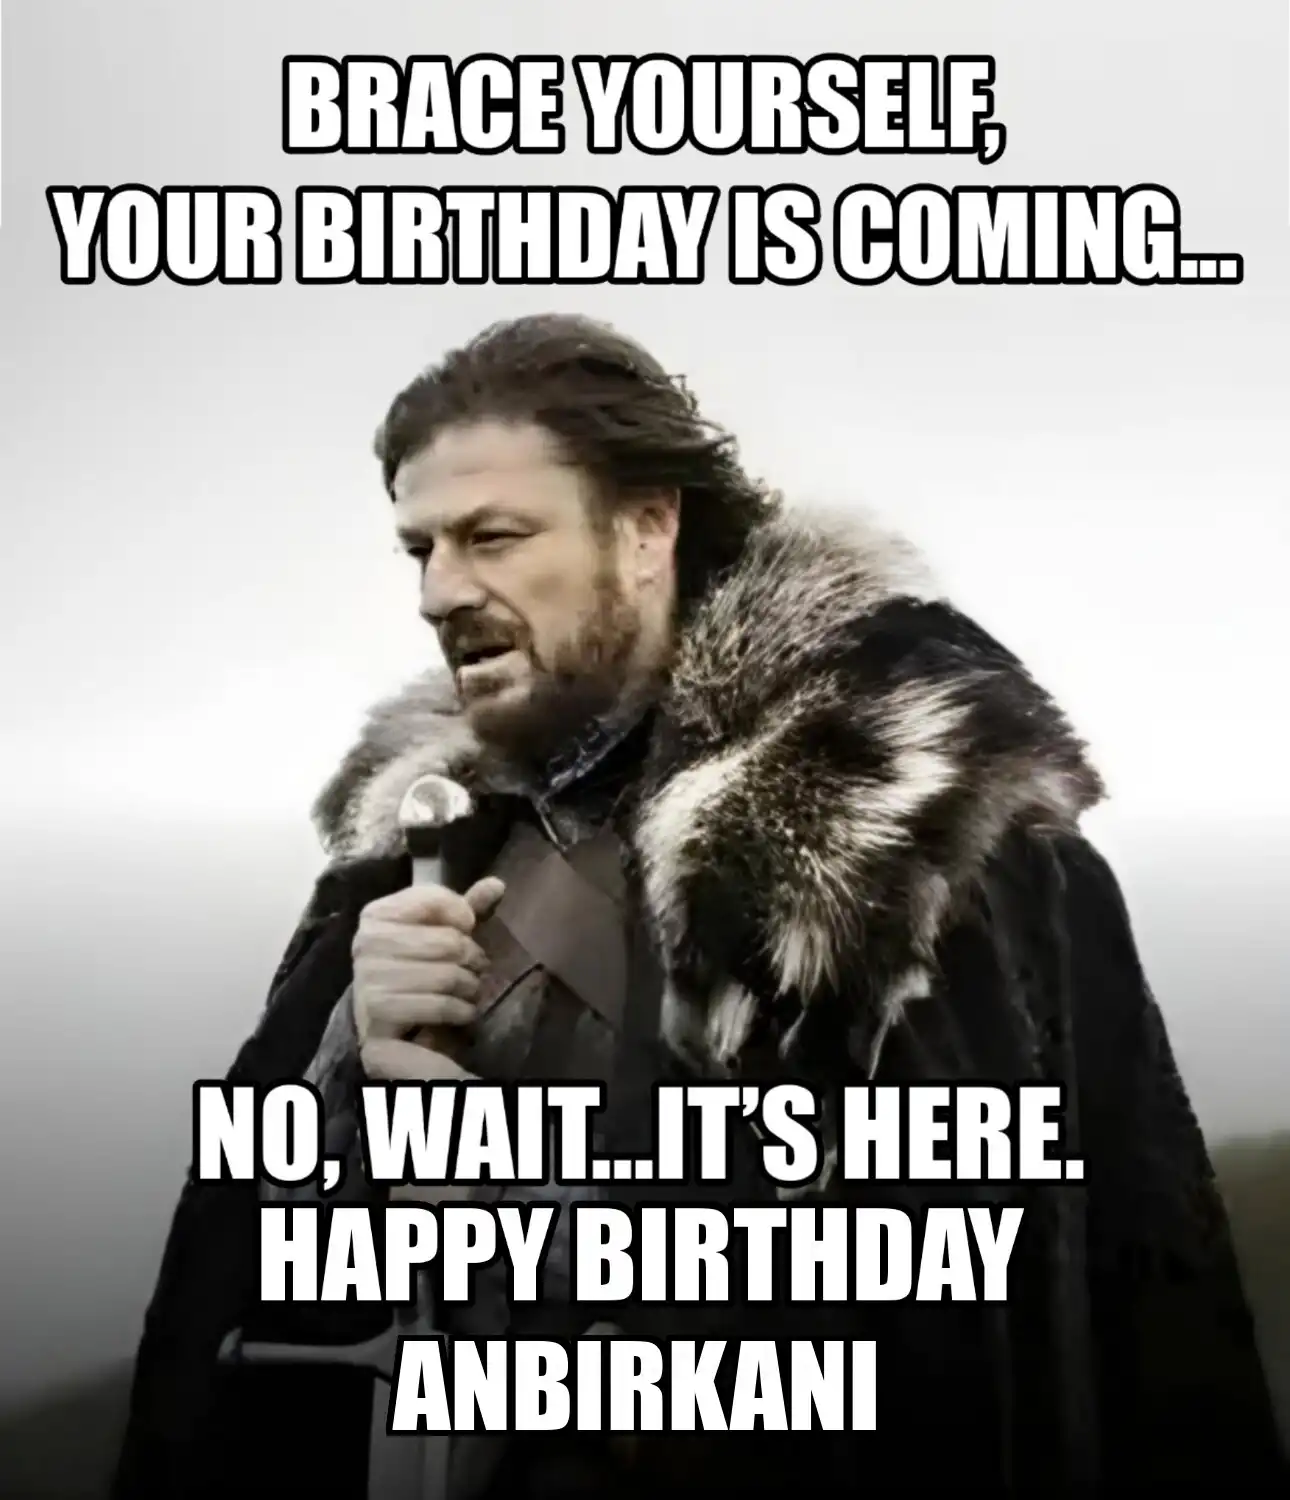 Happy Birthday Anbirkani Brace Yourself Your Birthday Is Coming Meme